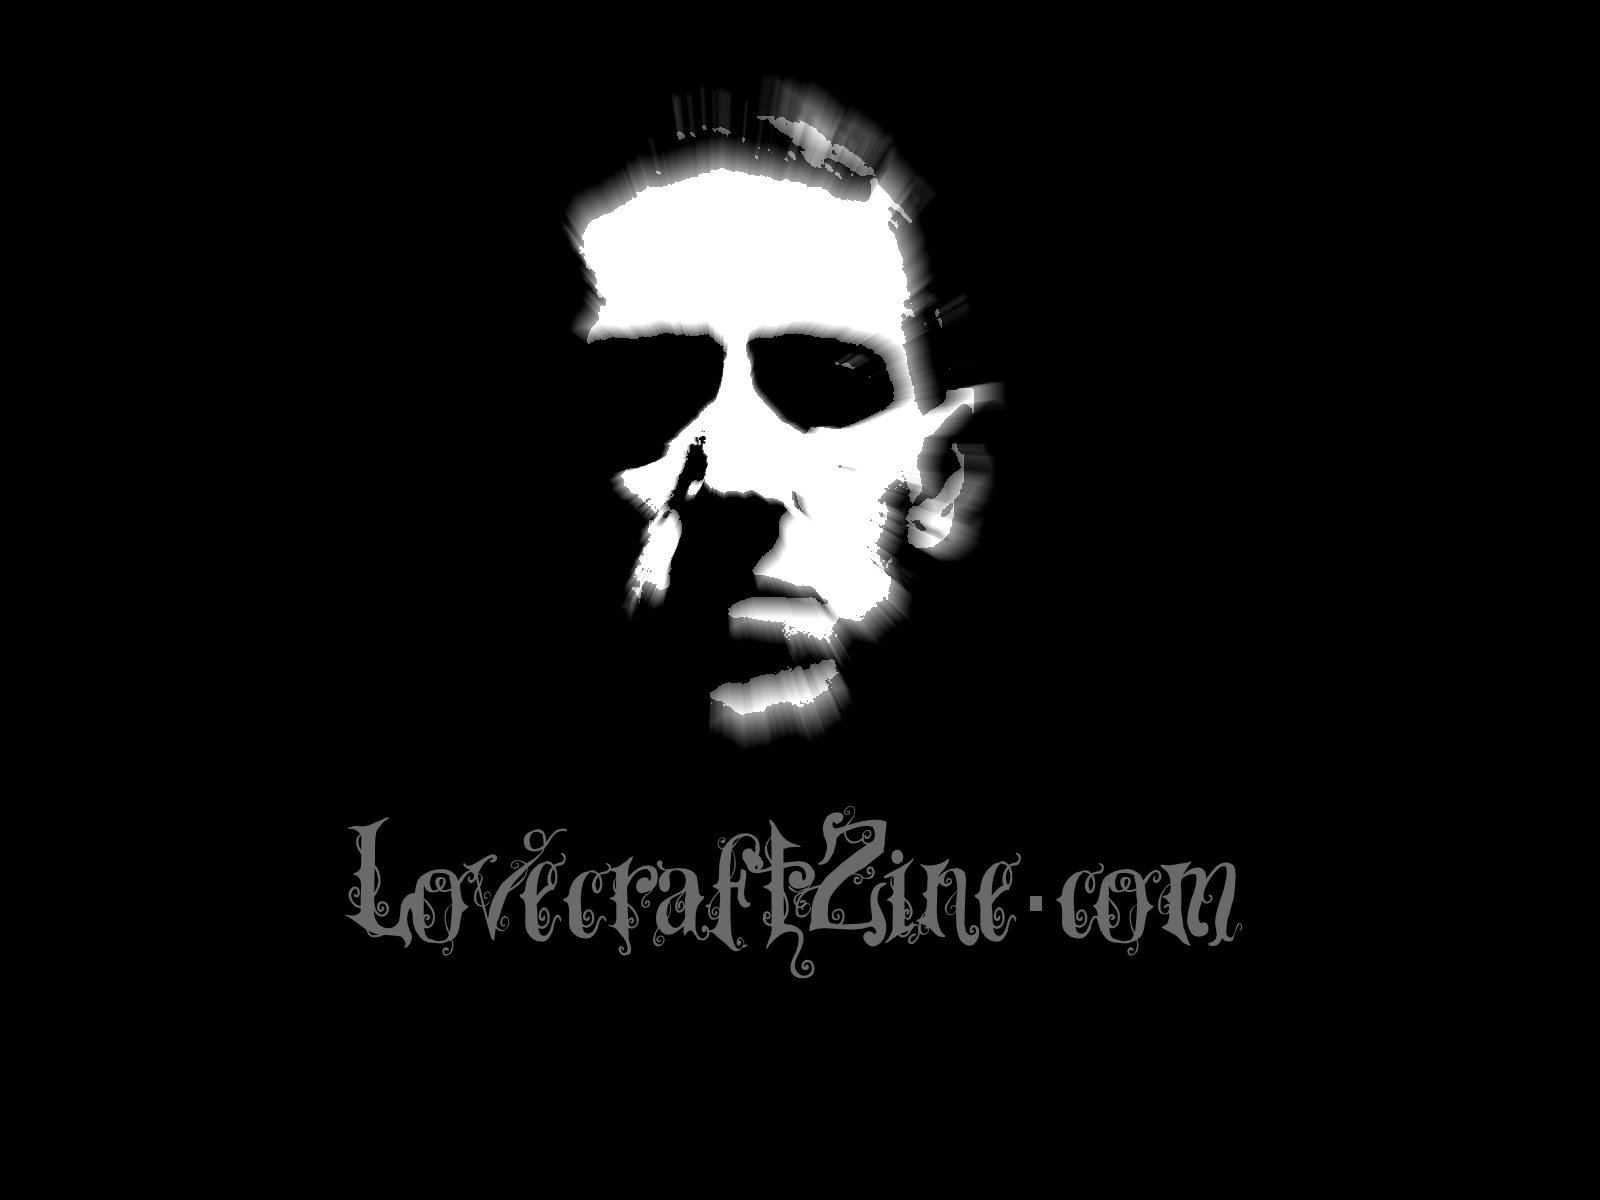 Hp Lovecraft Wallpaper Ezine